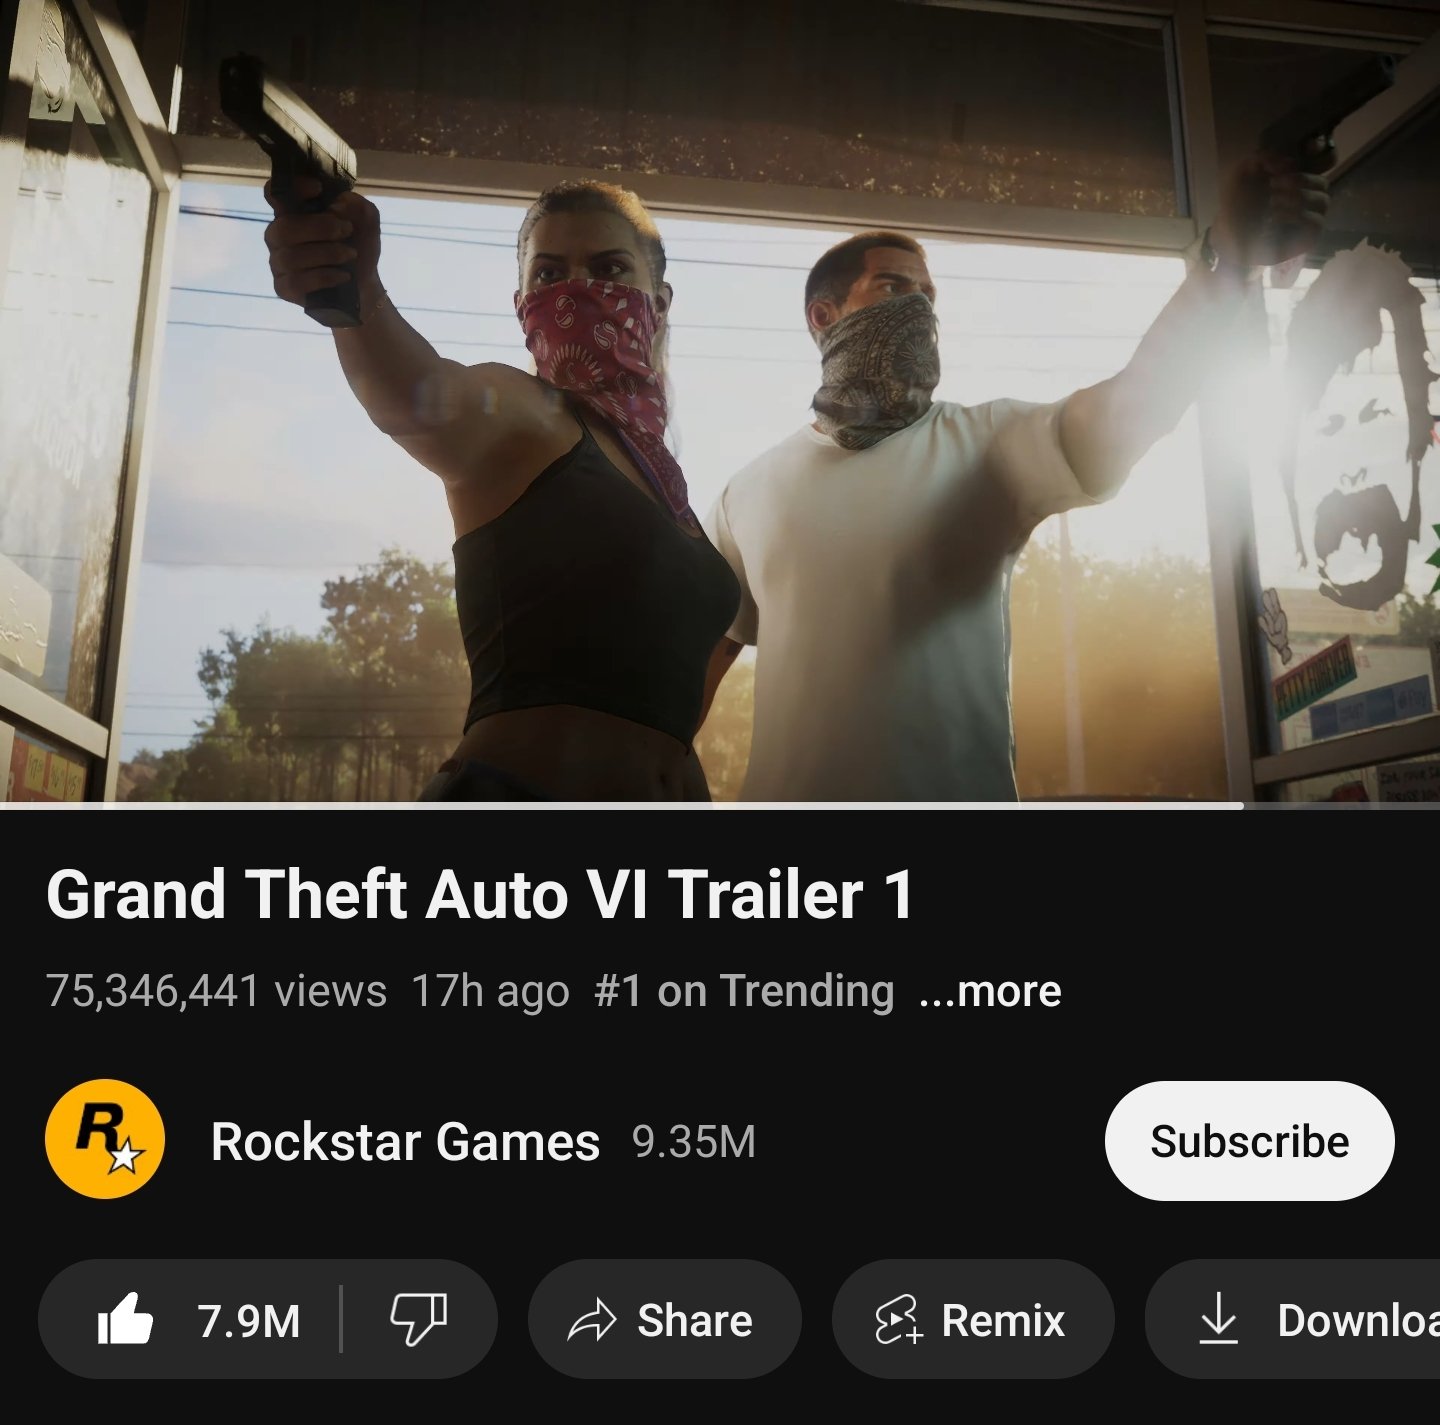 Benji-Sales on X: Rockstar Games announcement the first trailer